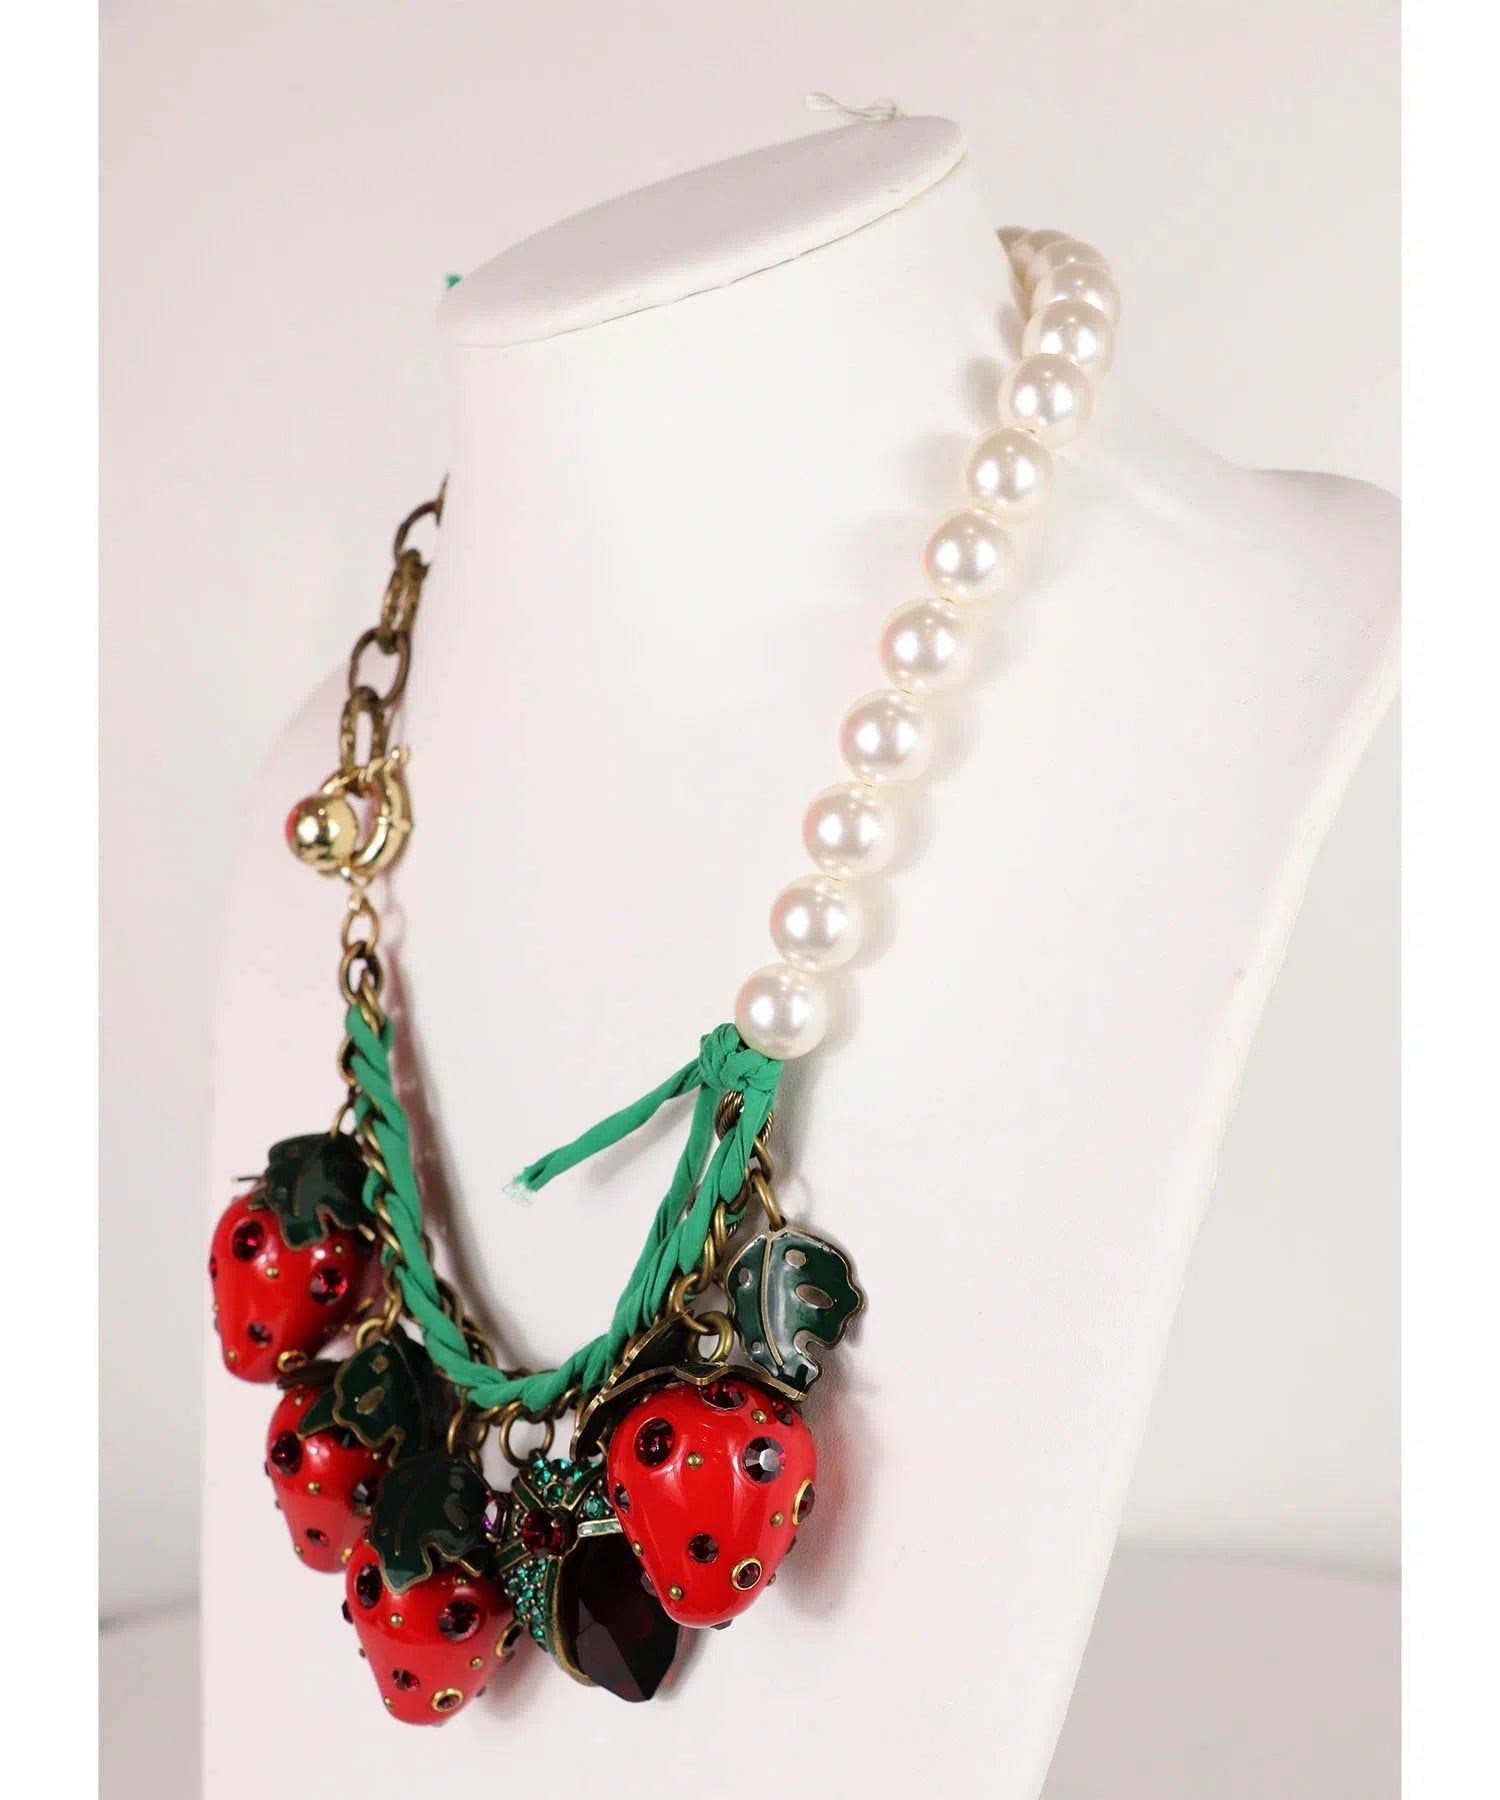 Lanvin Strawberry & Pearl Necklace - Foxy Couture Carmel